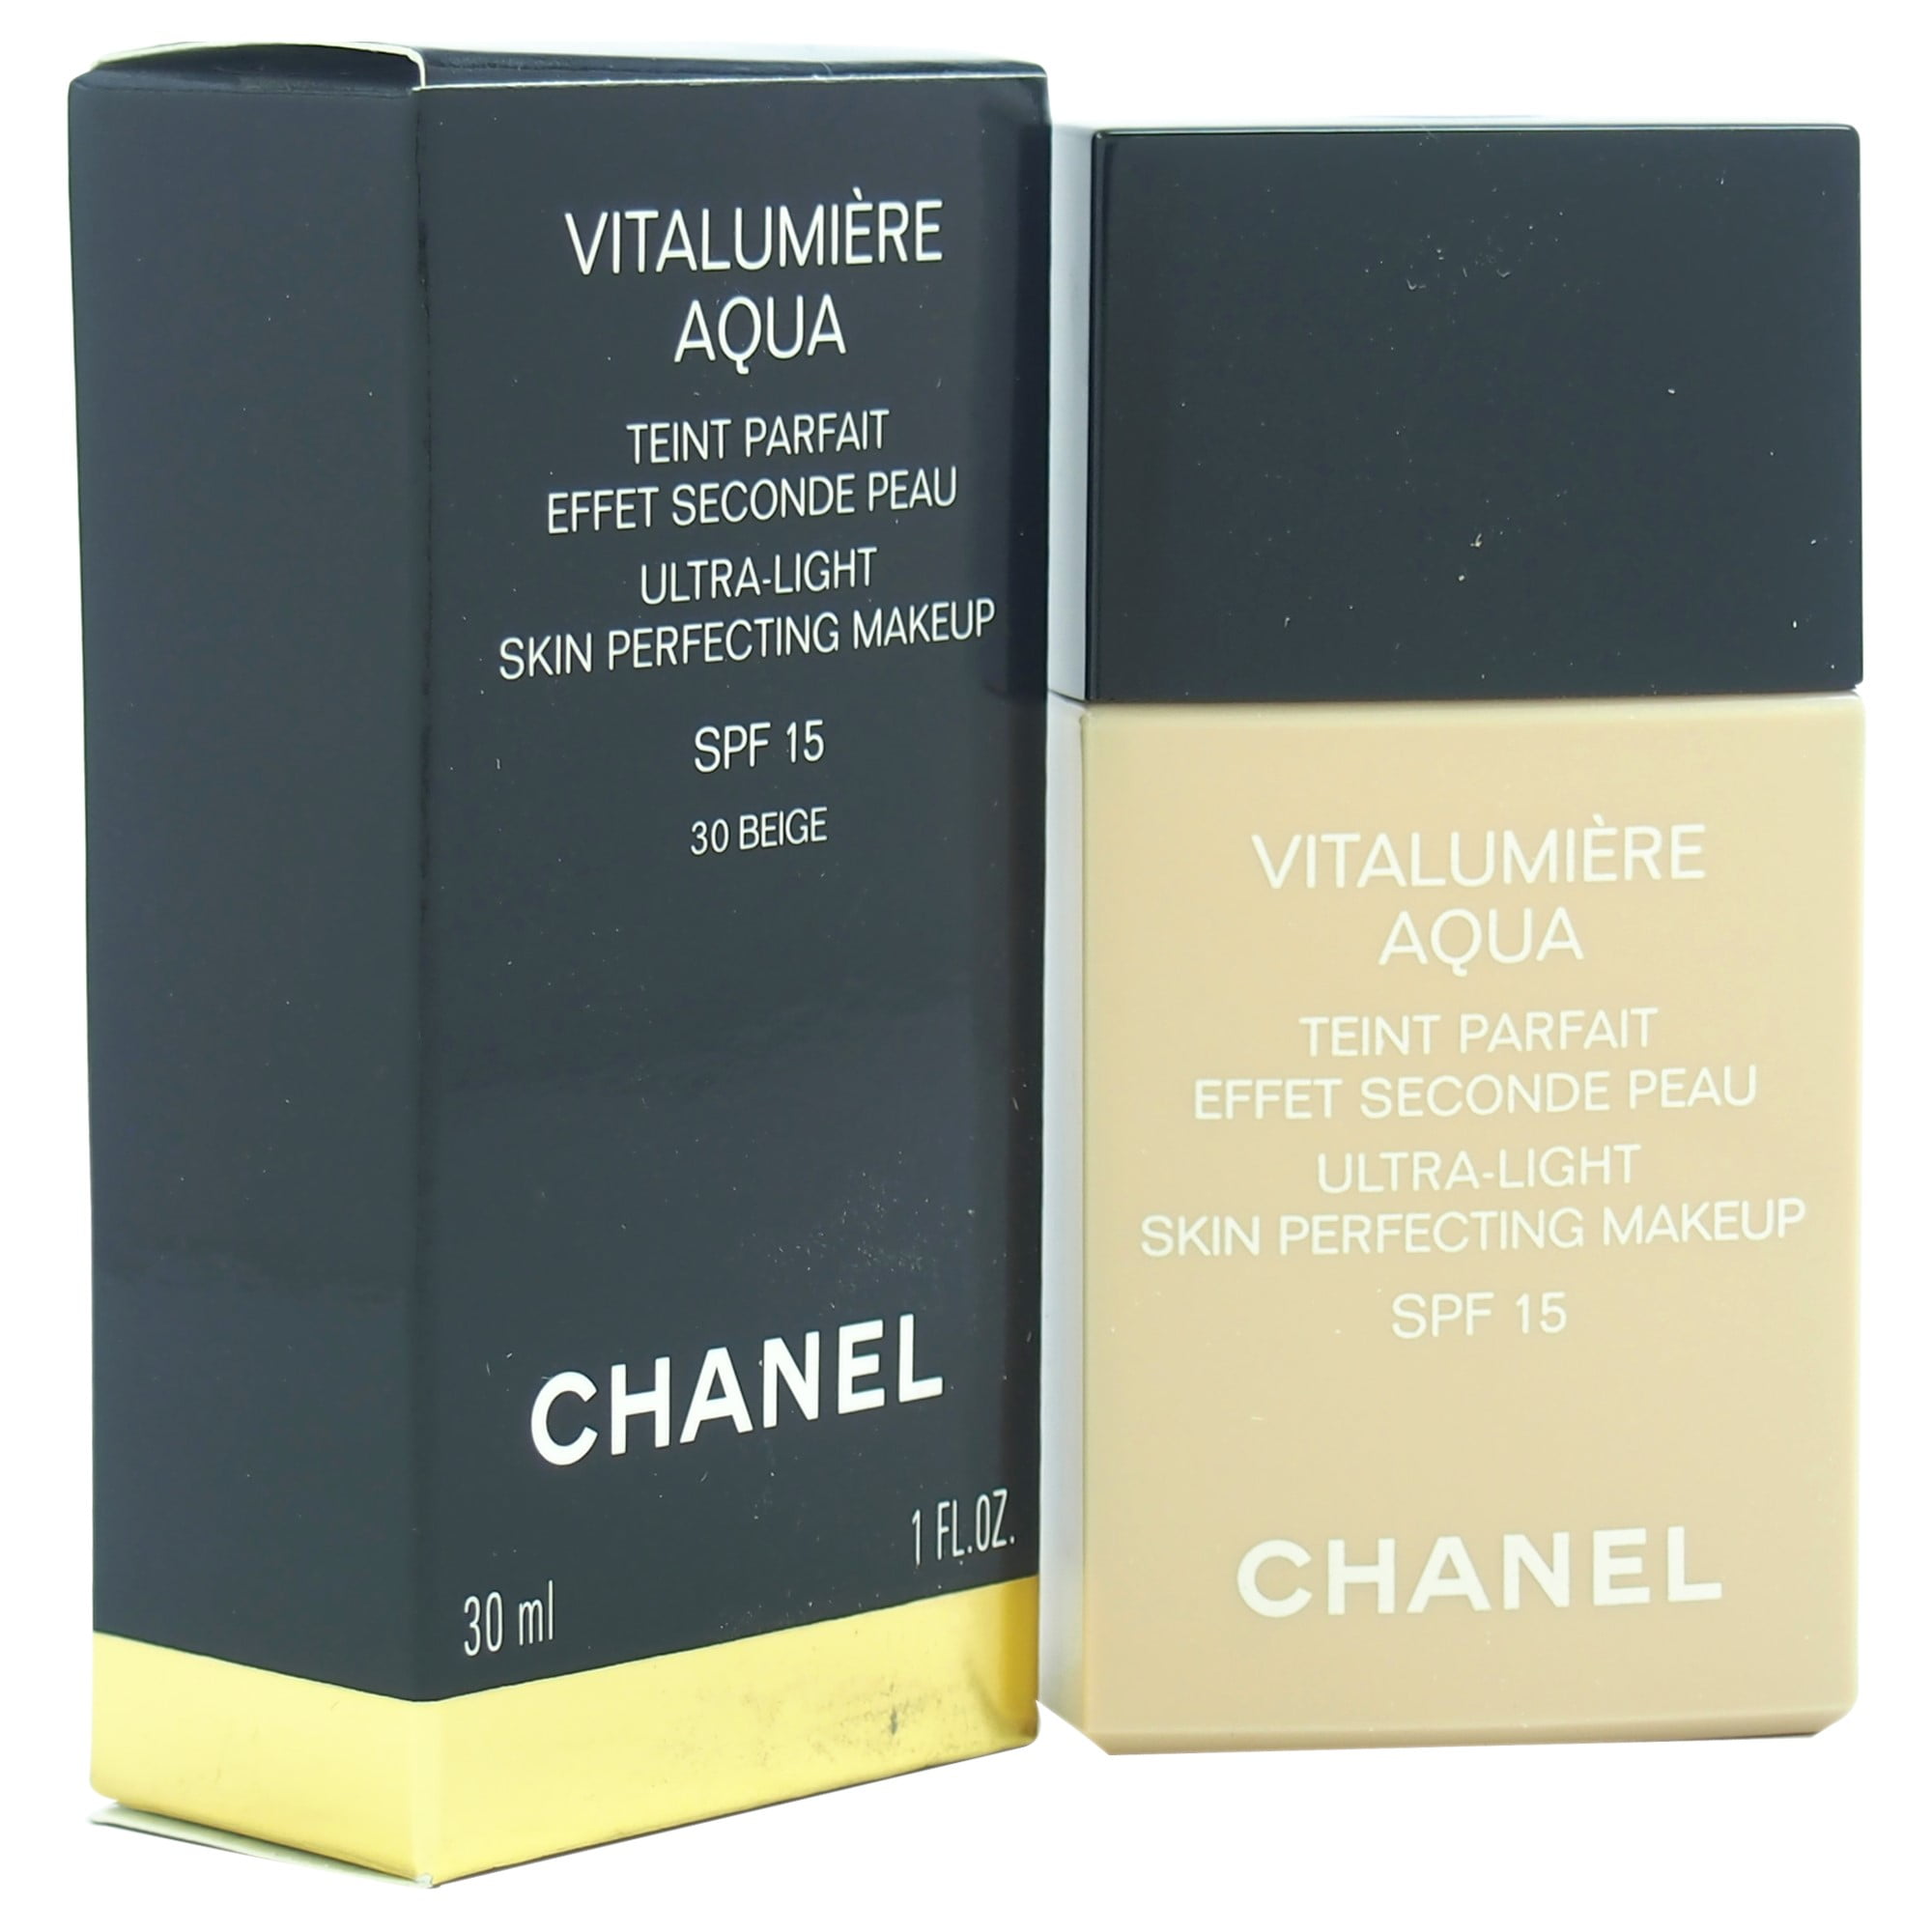 Chanel Vitalumiere Aqua Ultra-Light Skin Perfecting Makeup SPF 15